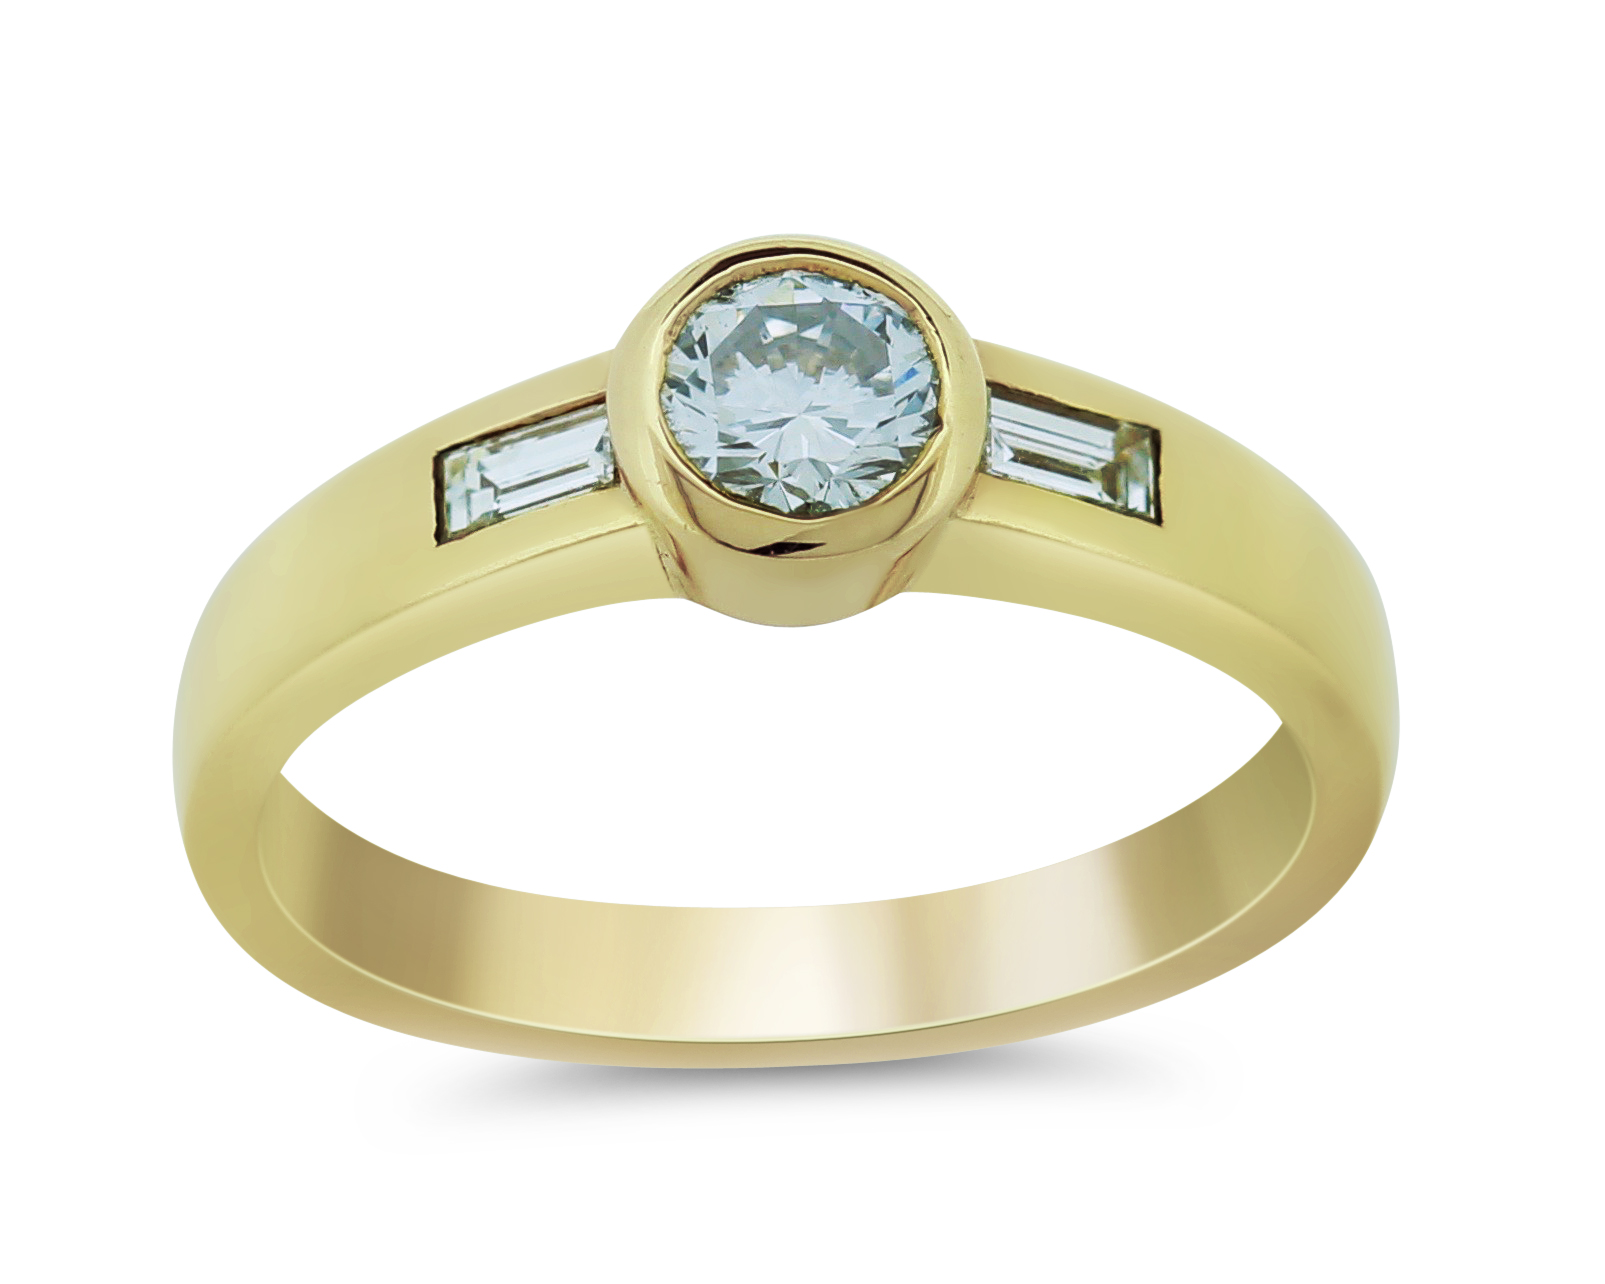 Janet Isherwood Jewellery diamond ring. JIR010 - Janet Isherwood Jewellery